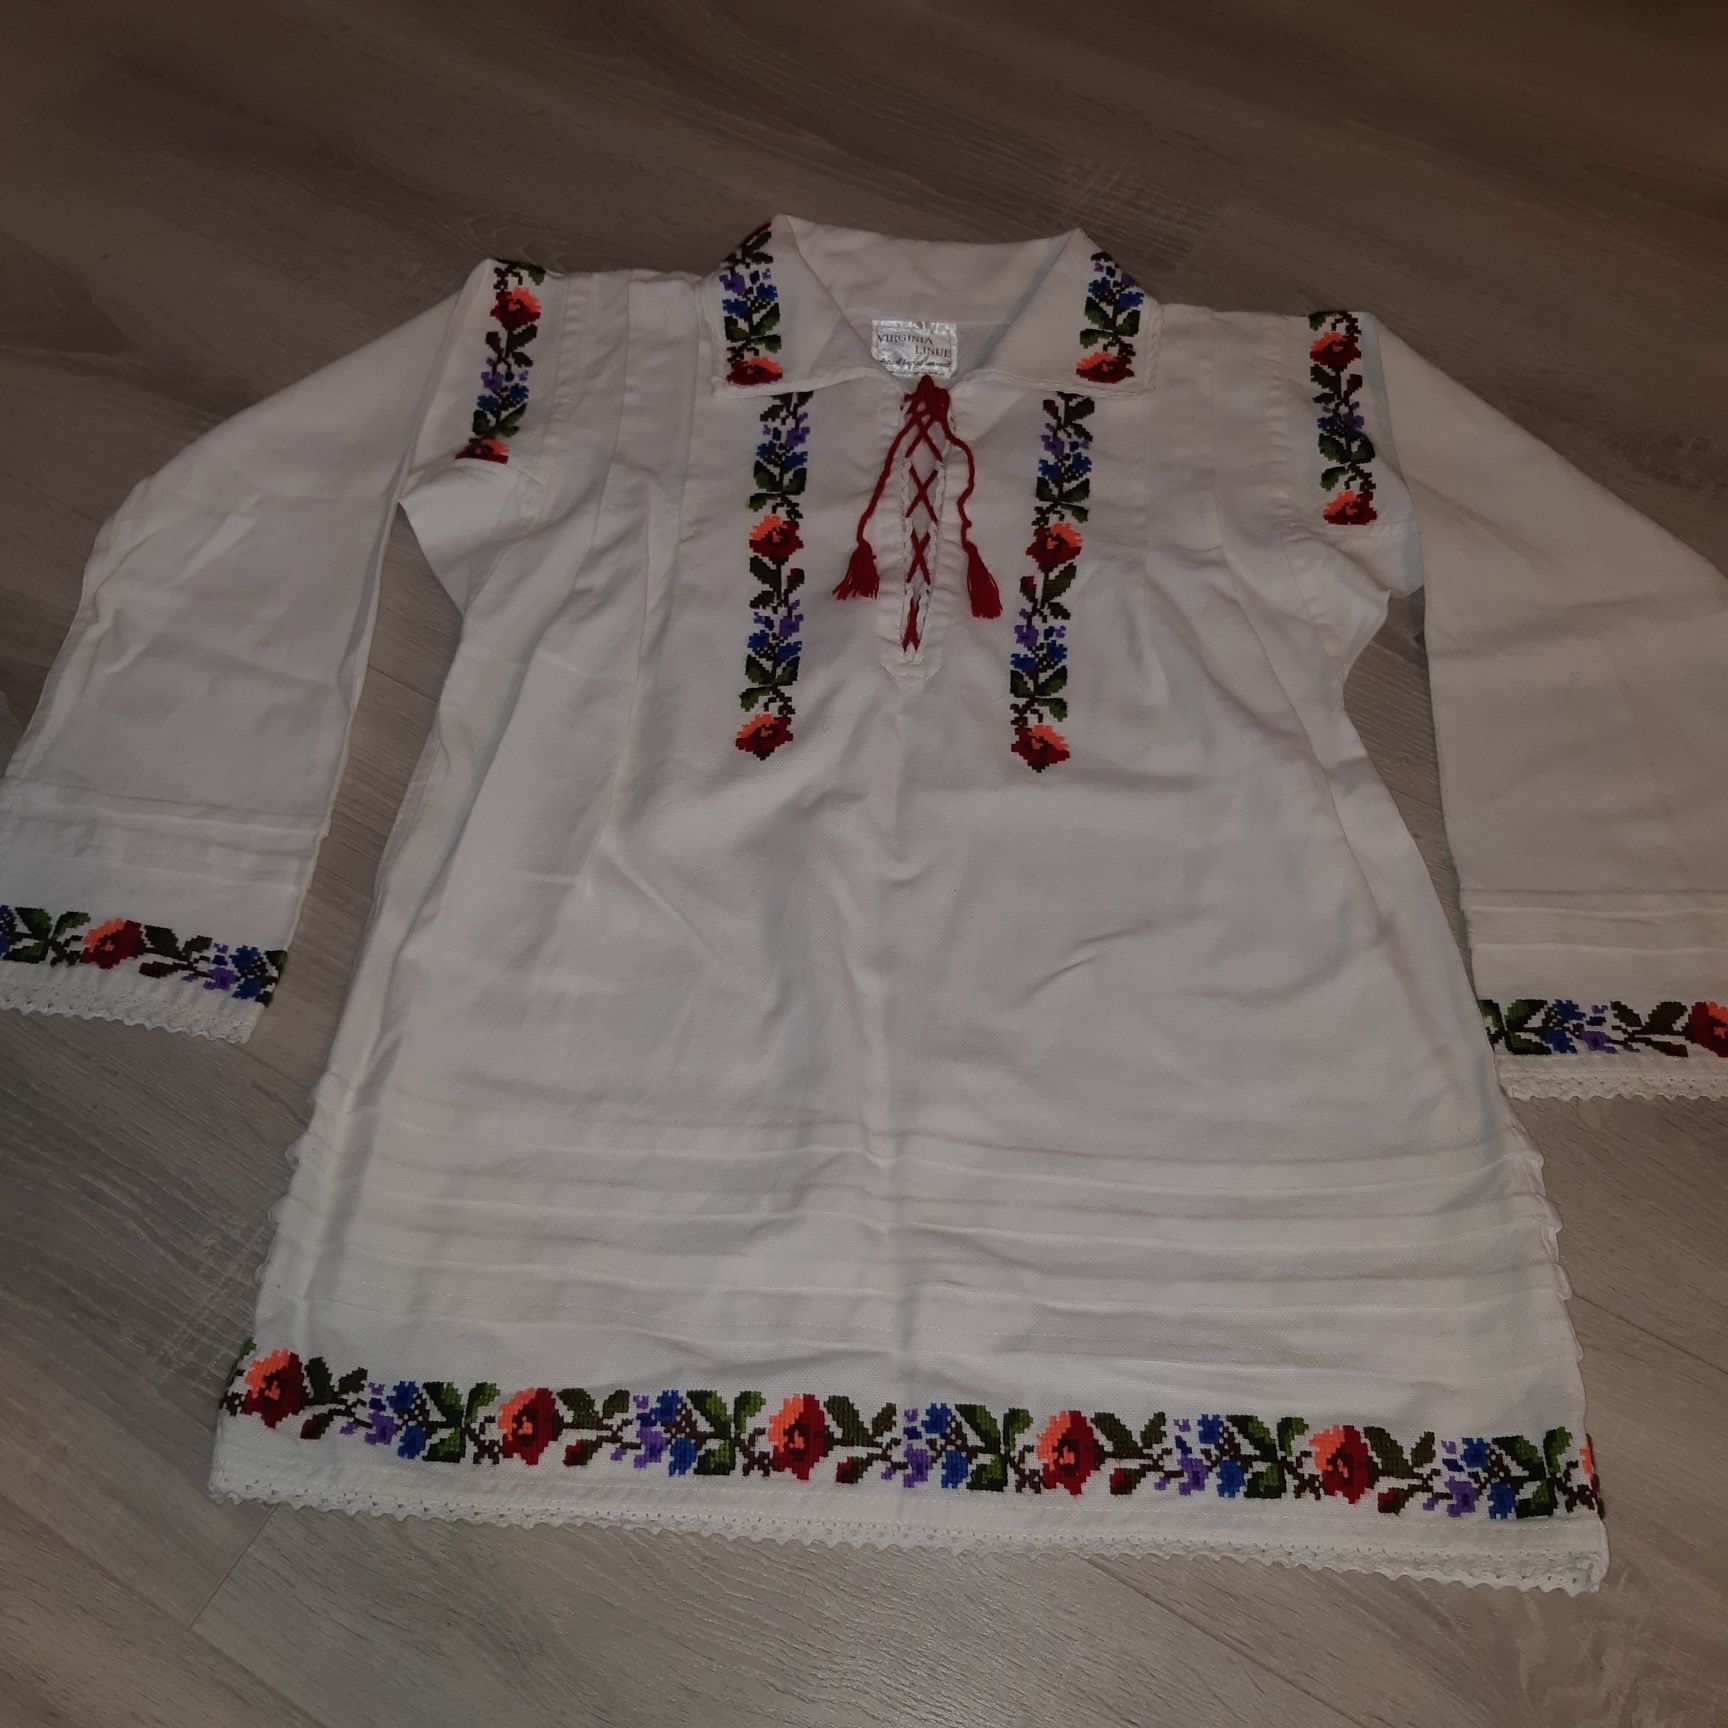 Vand camasa populara traditionala pt copii